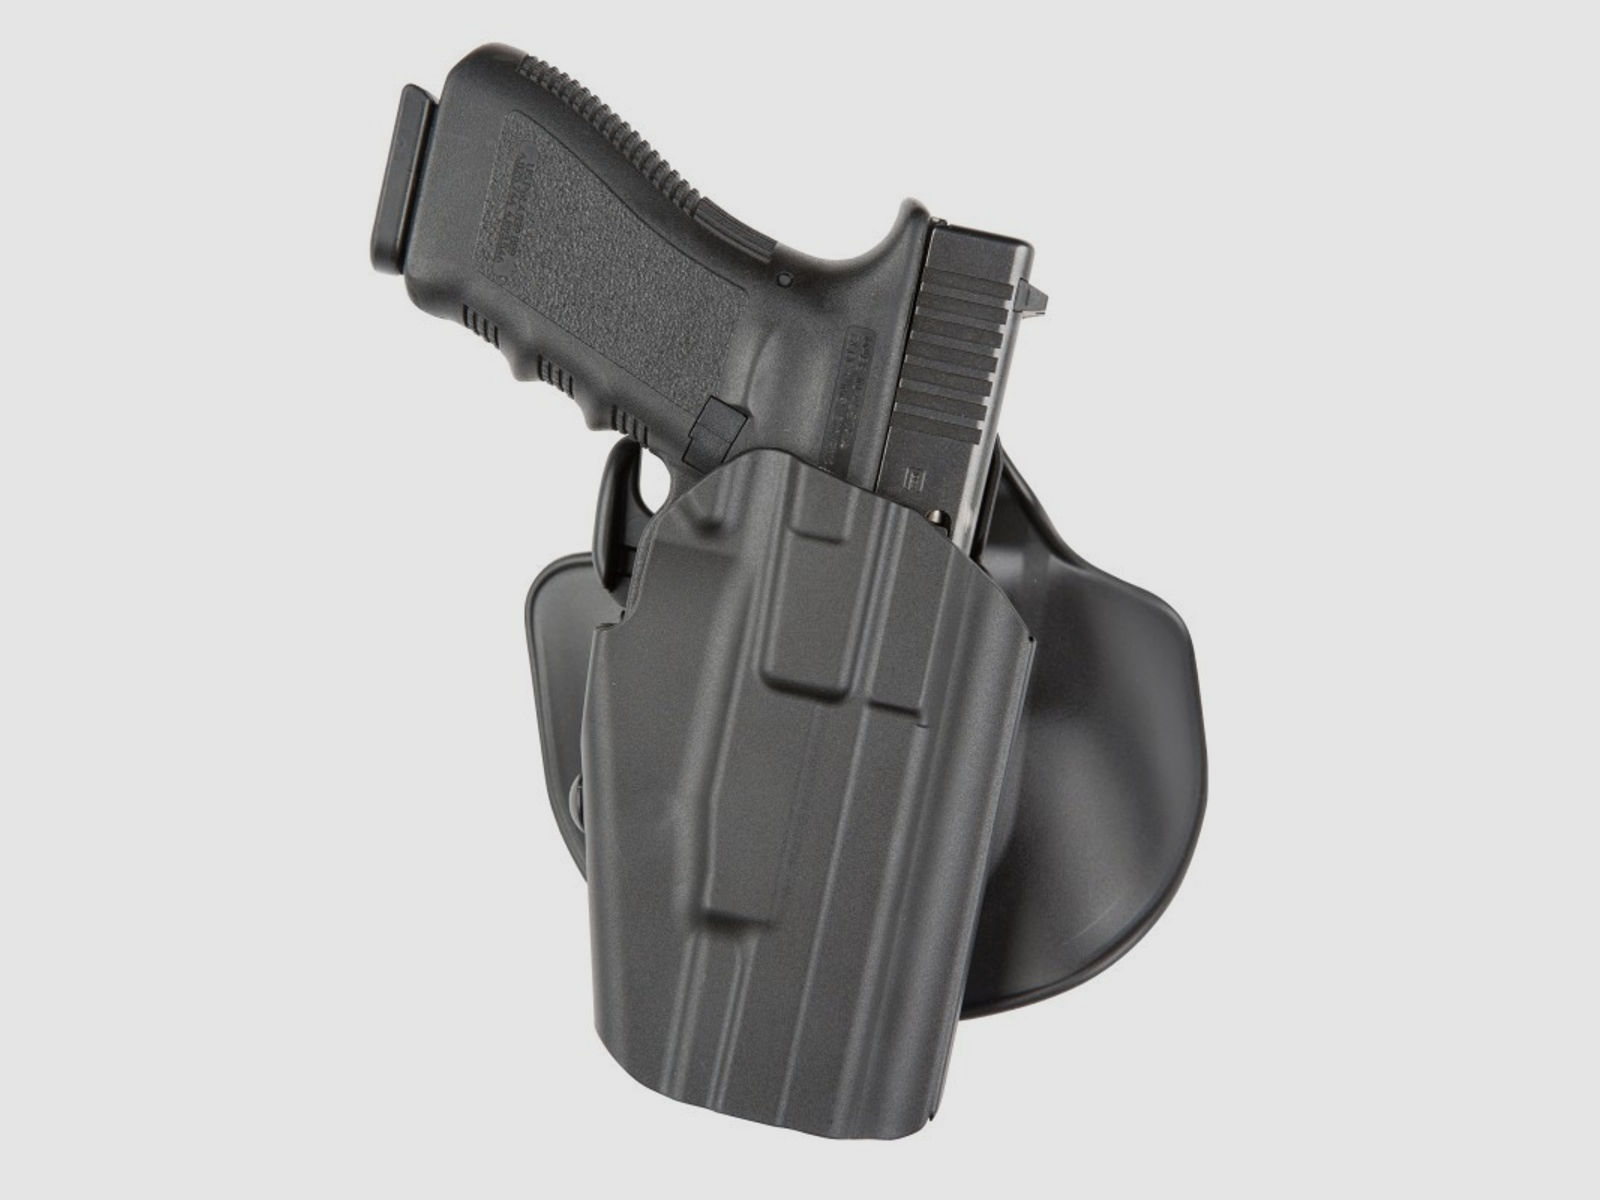 SAFARILAND 578 GLS "PRO-FIT" 7TS Paddleholster 183* Glock 26/27/30/30S/33/39,H&K P2000SK/P30SK,S&amp;W M&amp;P Shield/Compact,Walther P99C DAO/QA/AS/PPS 9mm,.40-Schwarz-Links